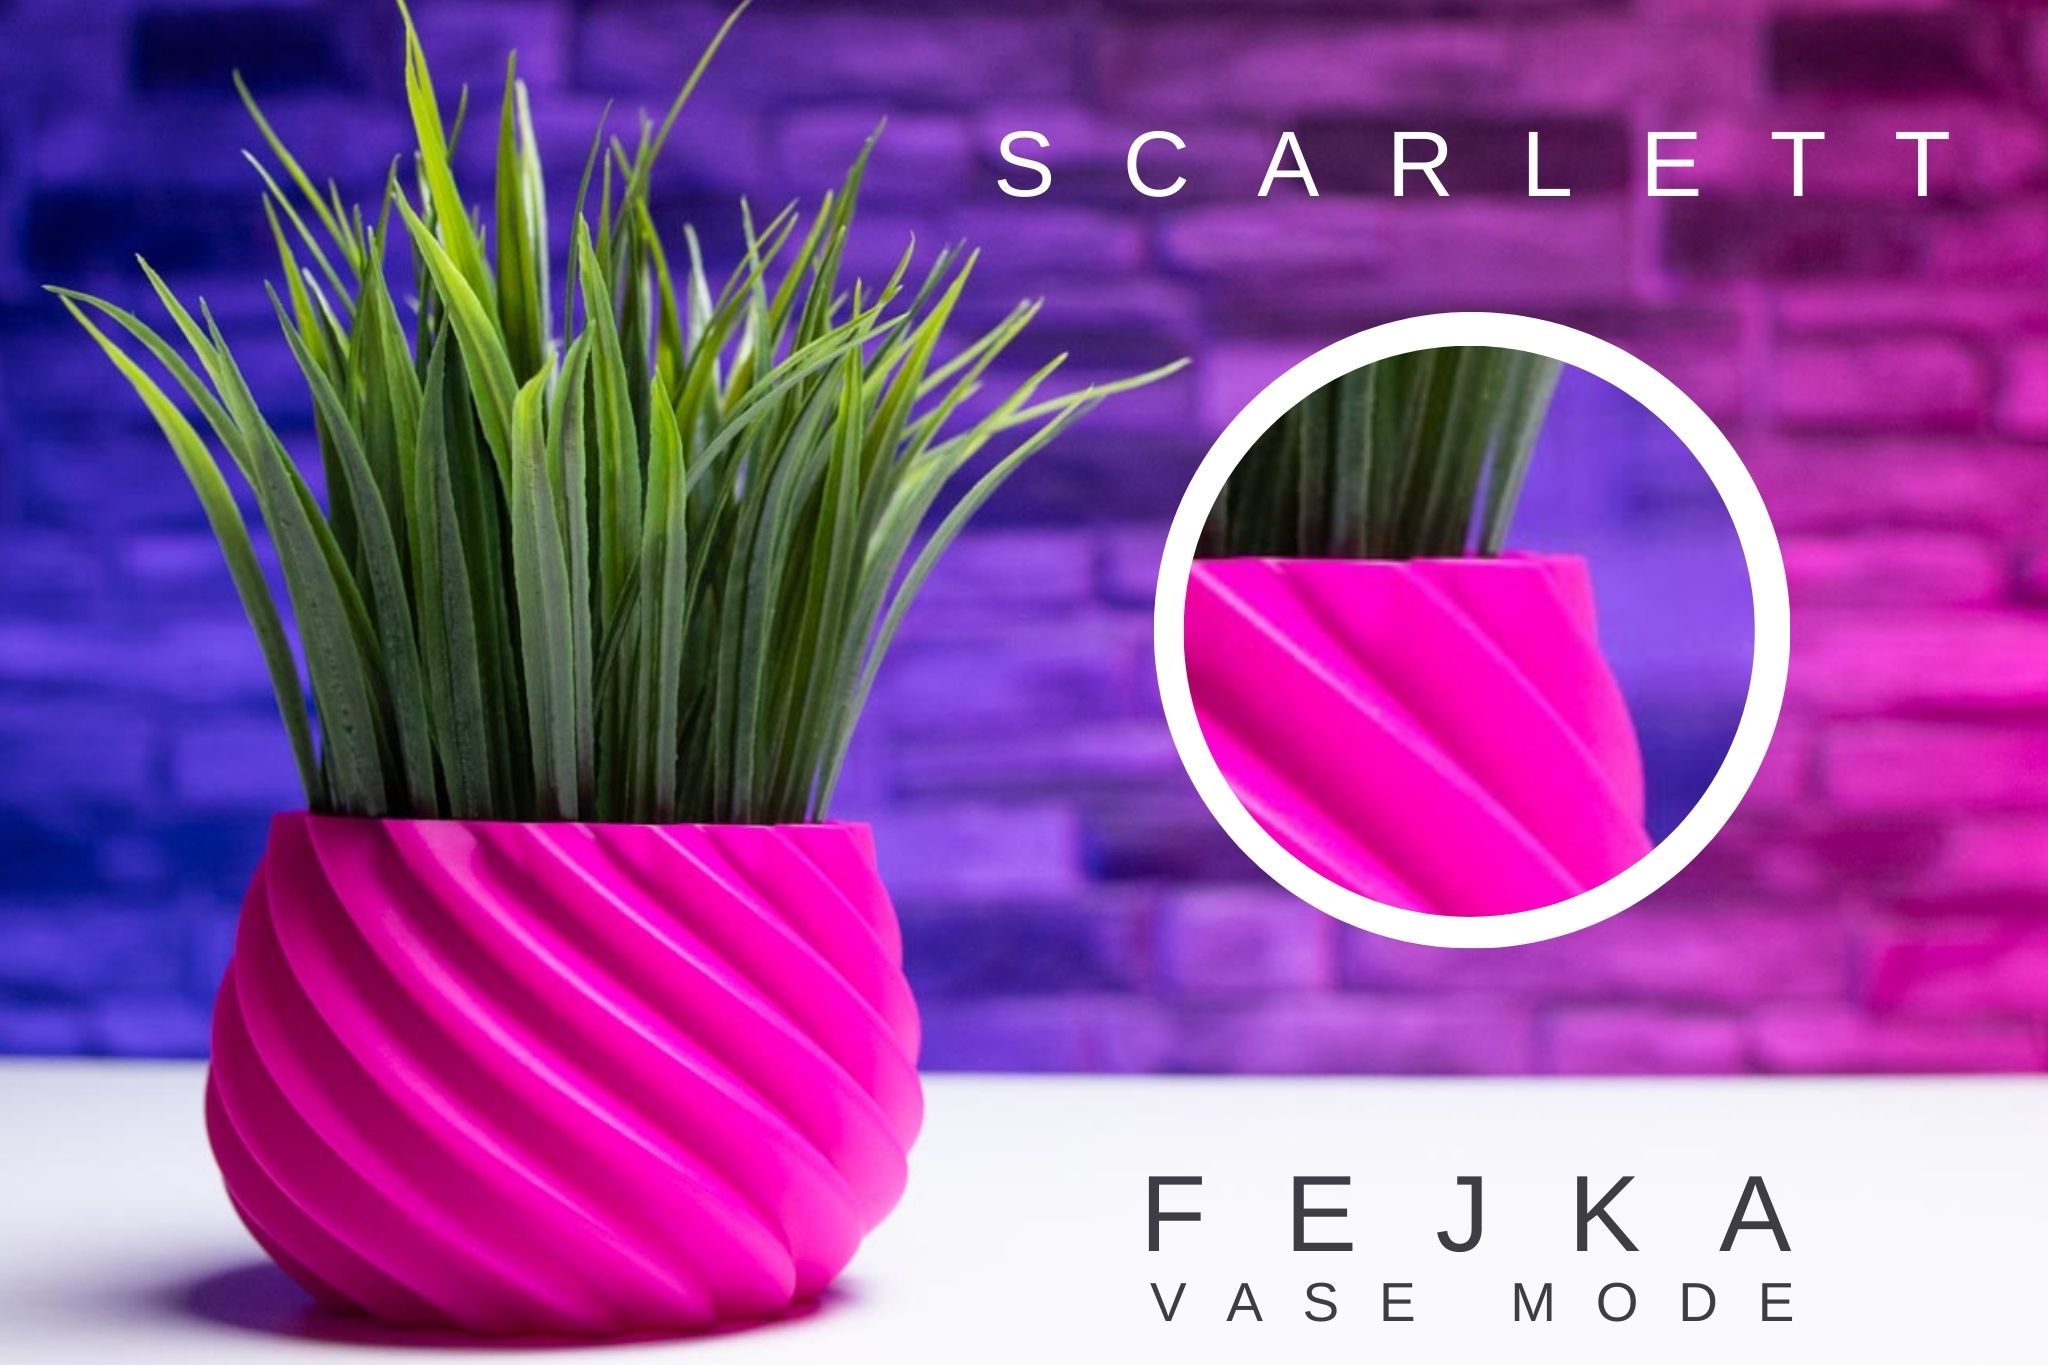 3D Printed Planter and Pot for Ikea Fejka - Vase SCARLETT